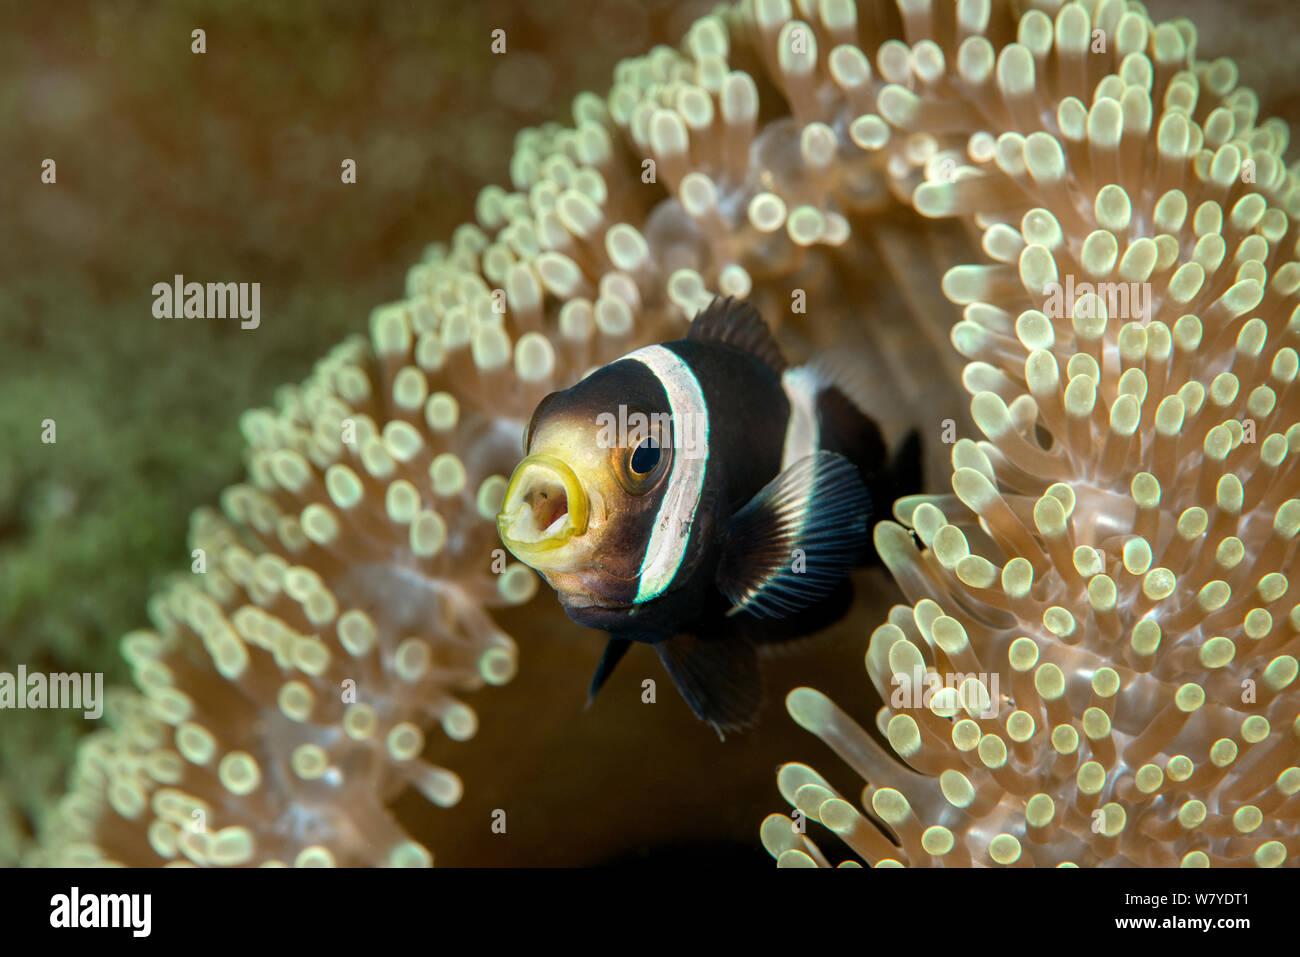 Saddleback anemonefish (Amphiprion polymnus) with its host sea anemone Stichodactyla haddoni. Lembeh Strait, North Sulawesi, Indonesia. Stock Photo